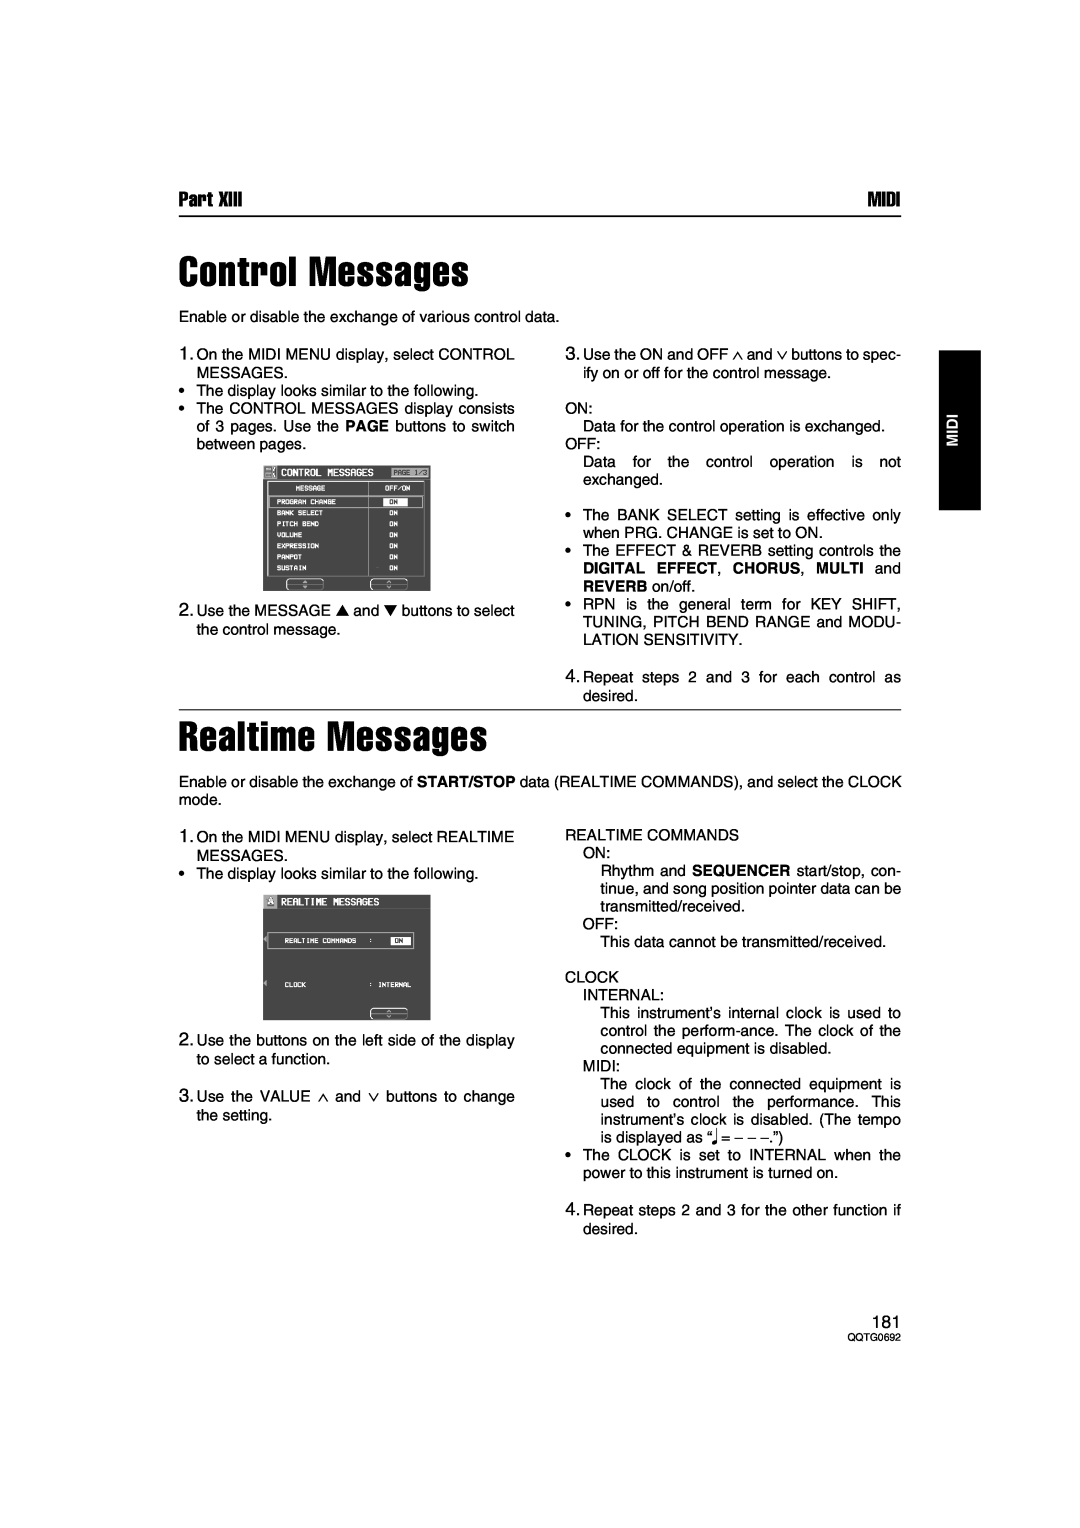 Panasonic SX-KN2400, SX-KN2600 manual Control Messages, Realtime Messages, Part, Midi 